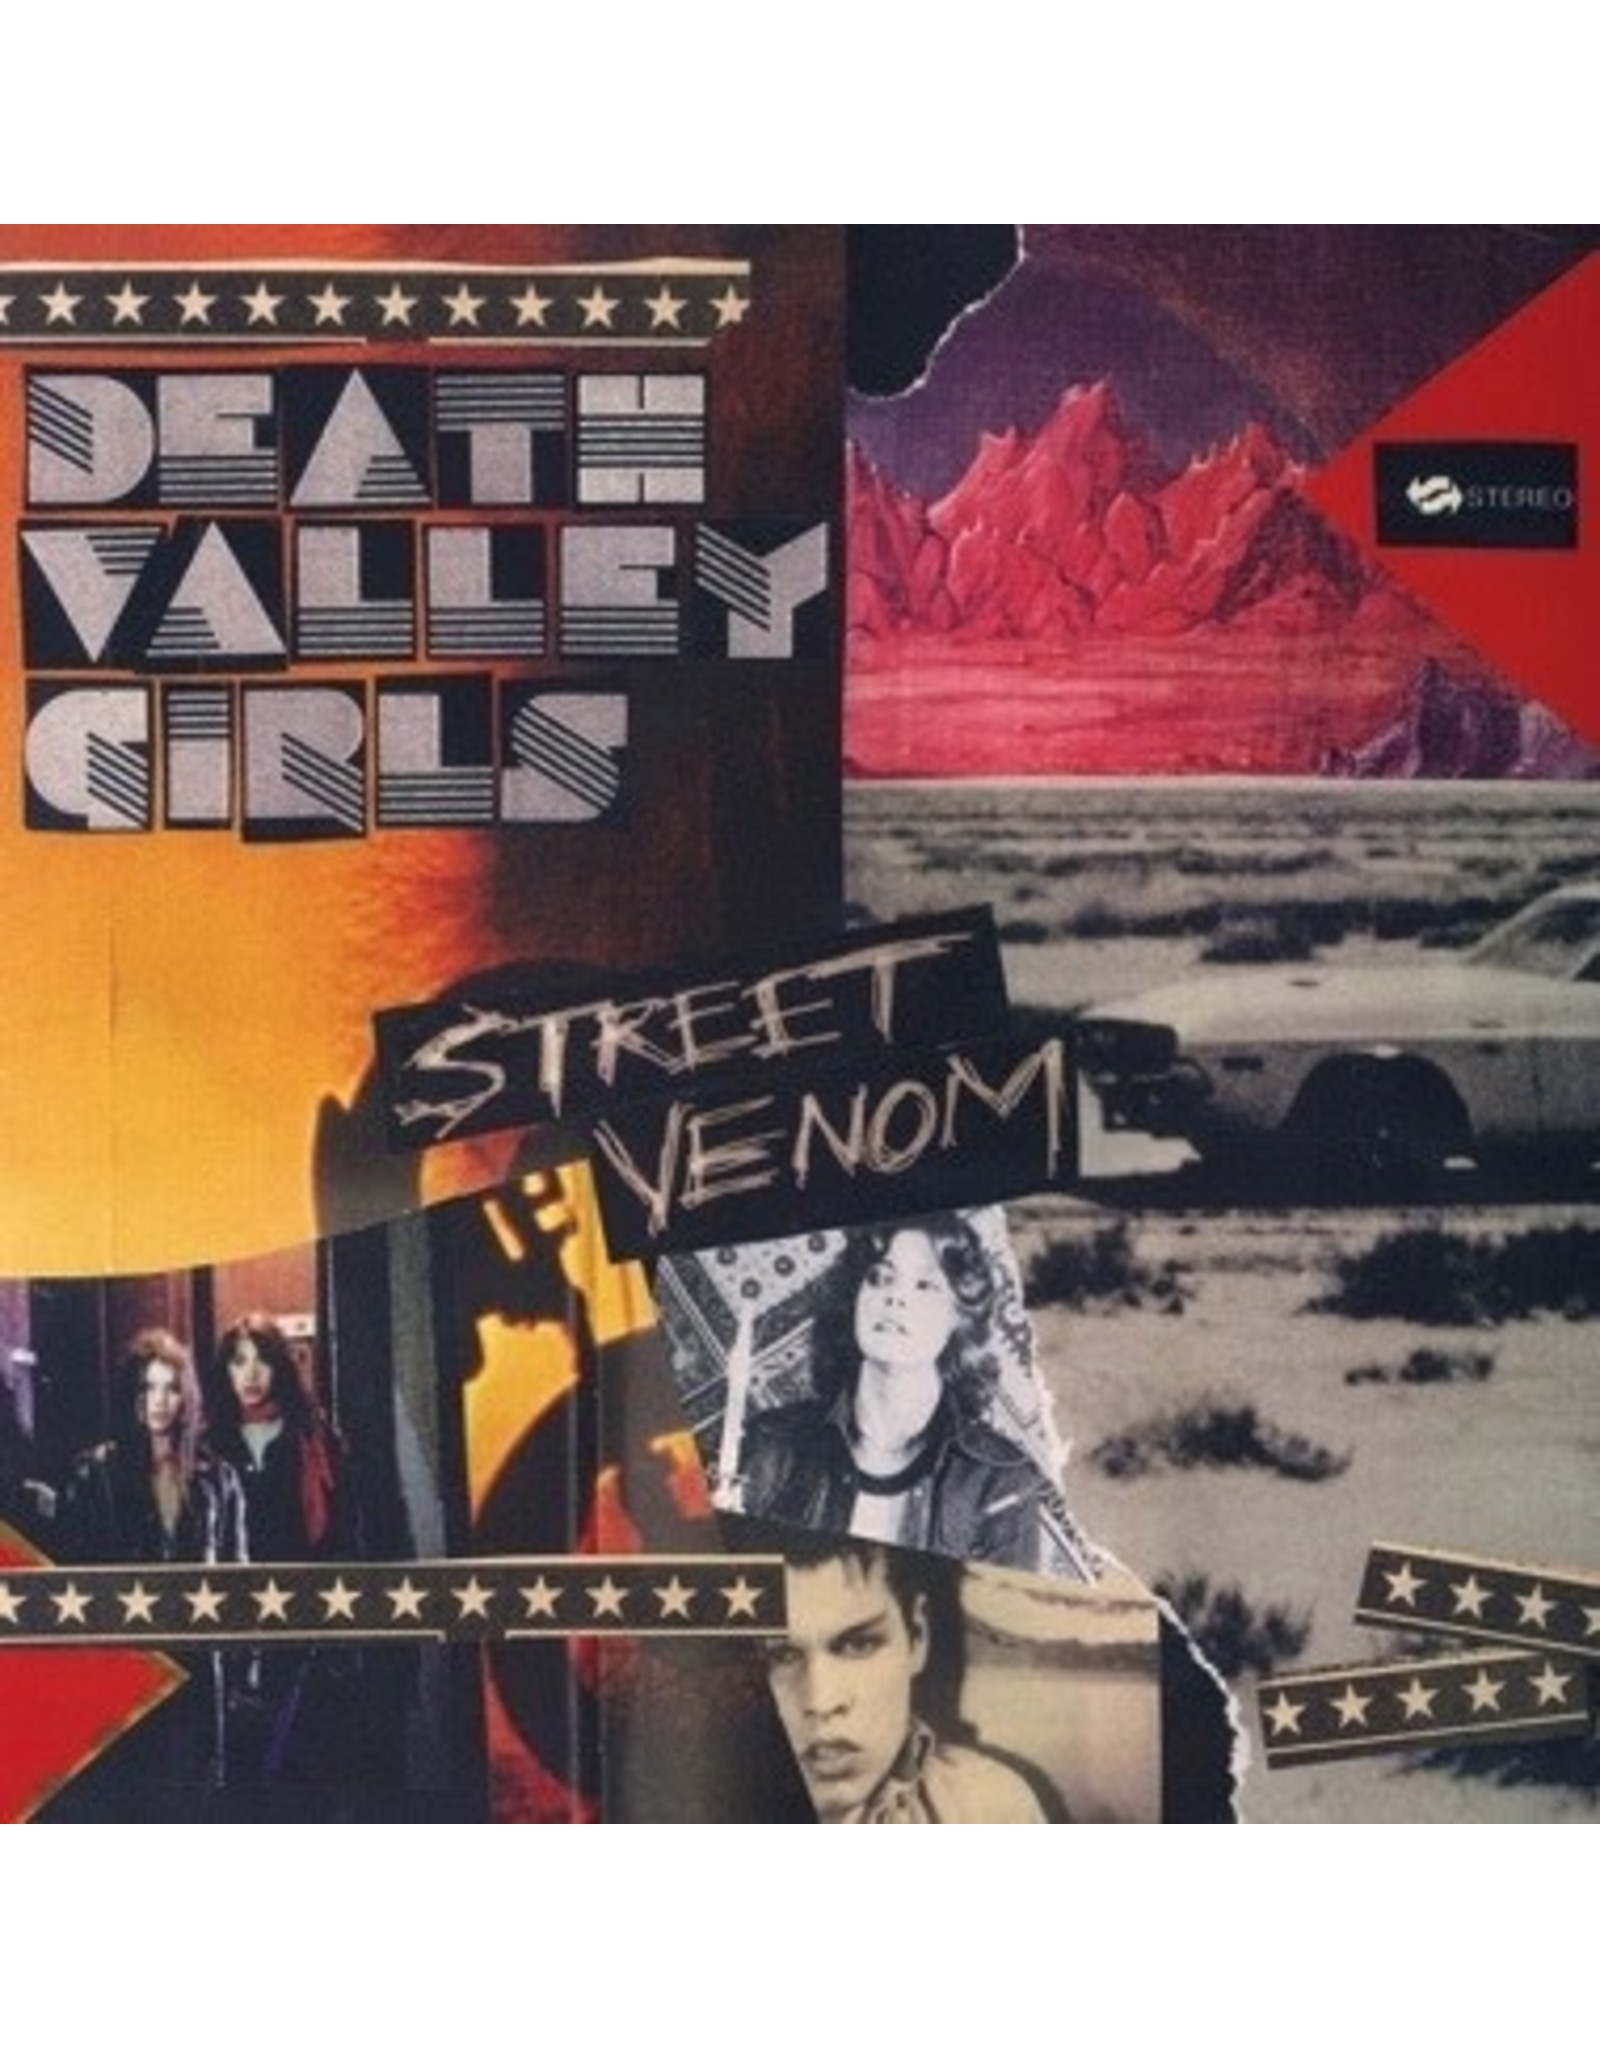 New Vinyl Death Valley Girls - Street Venom (Deluxe Edition, Colored) LP